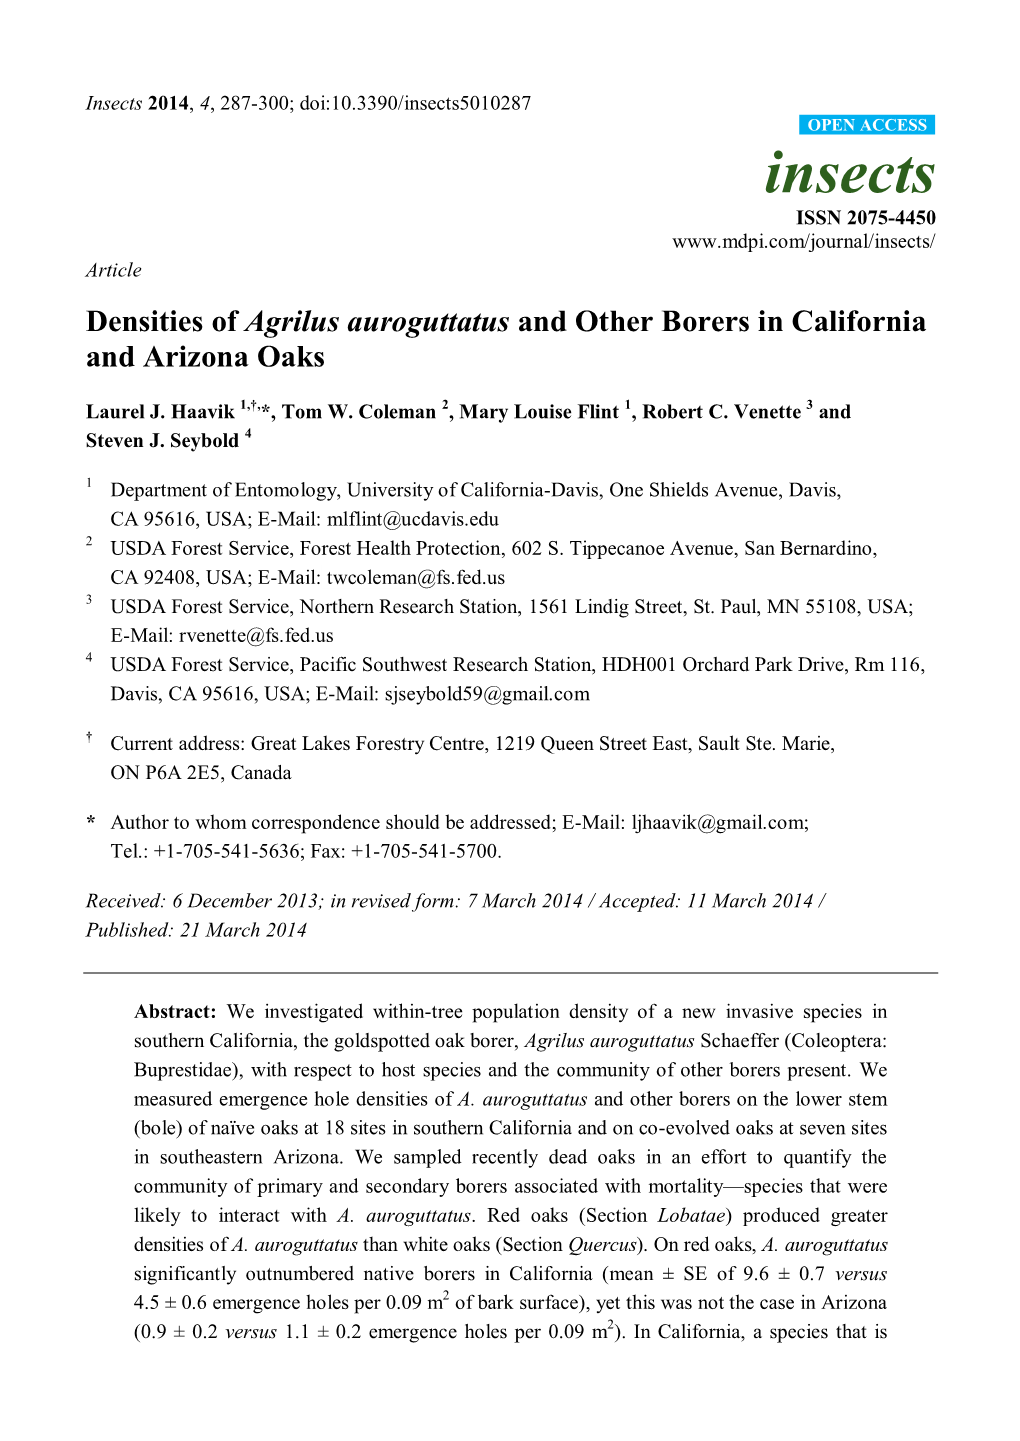 Densities of Agrilus Auroguttatus and Other Borers in California and Arizona Oaks